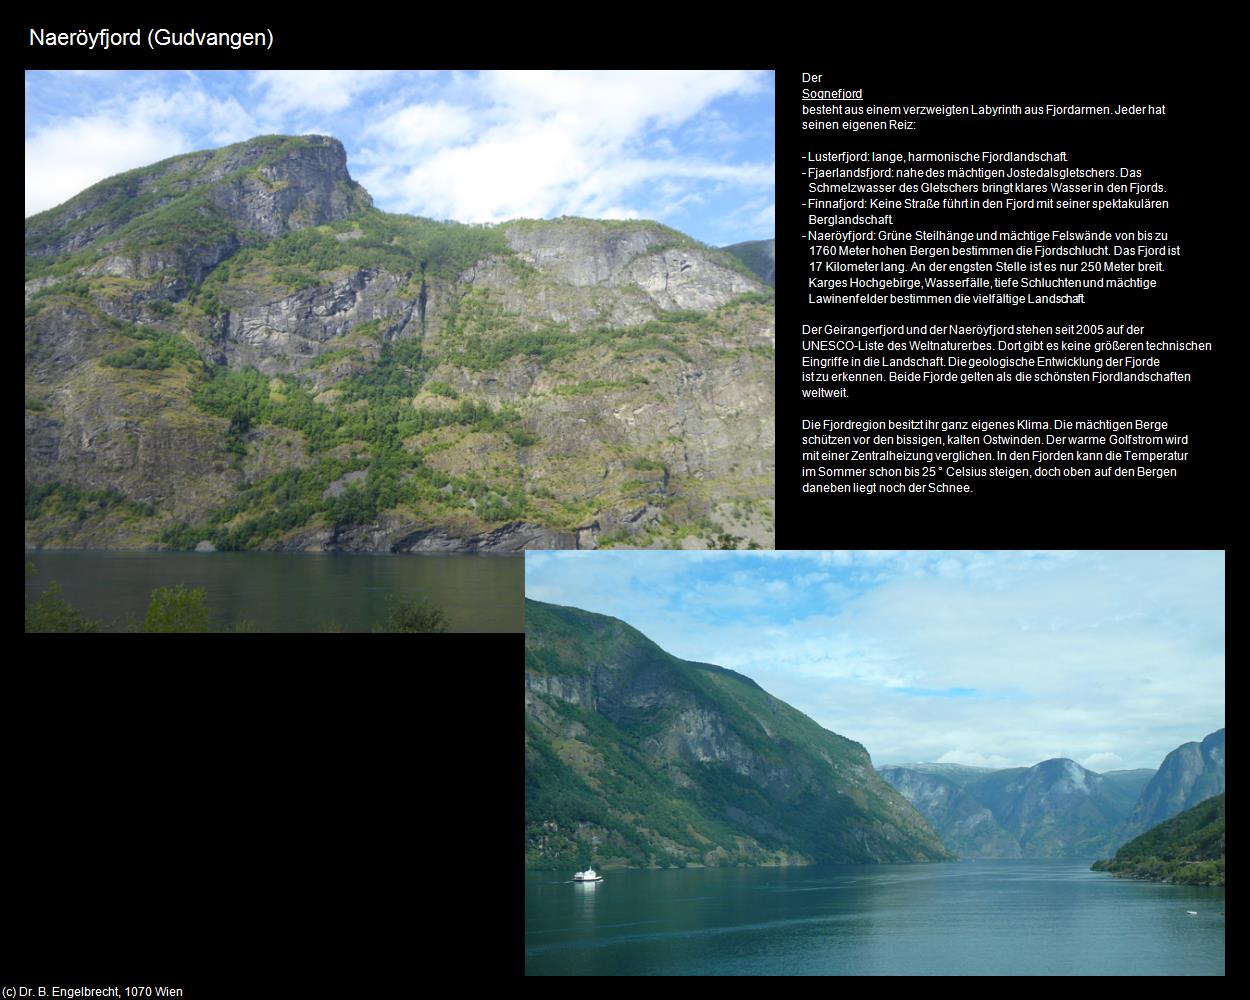 Naeröyfjord  (Gudvangen) in Kulturatlas-NORWEGEN(c)B.Engelbrecht